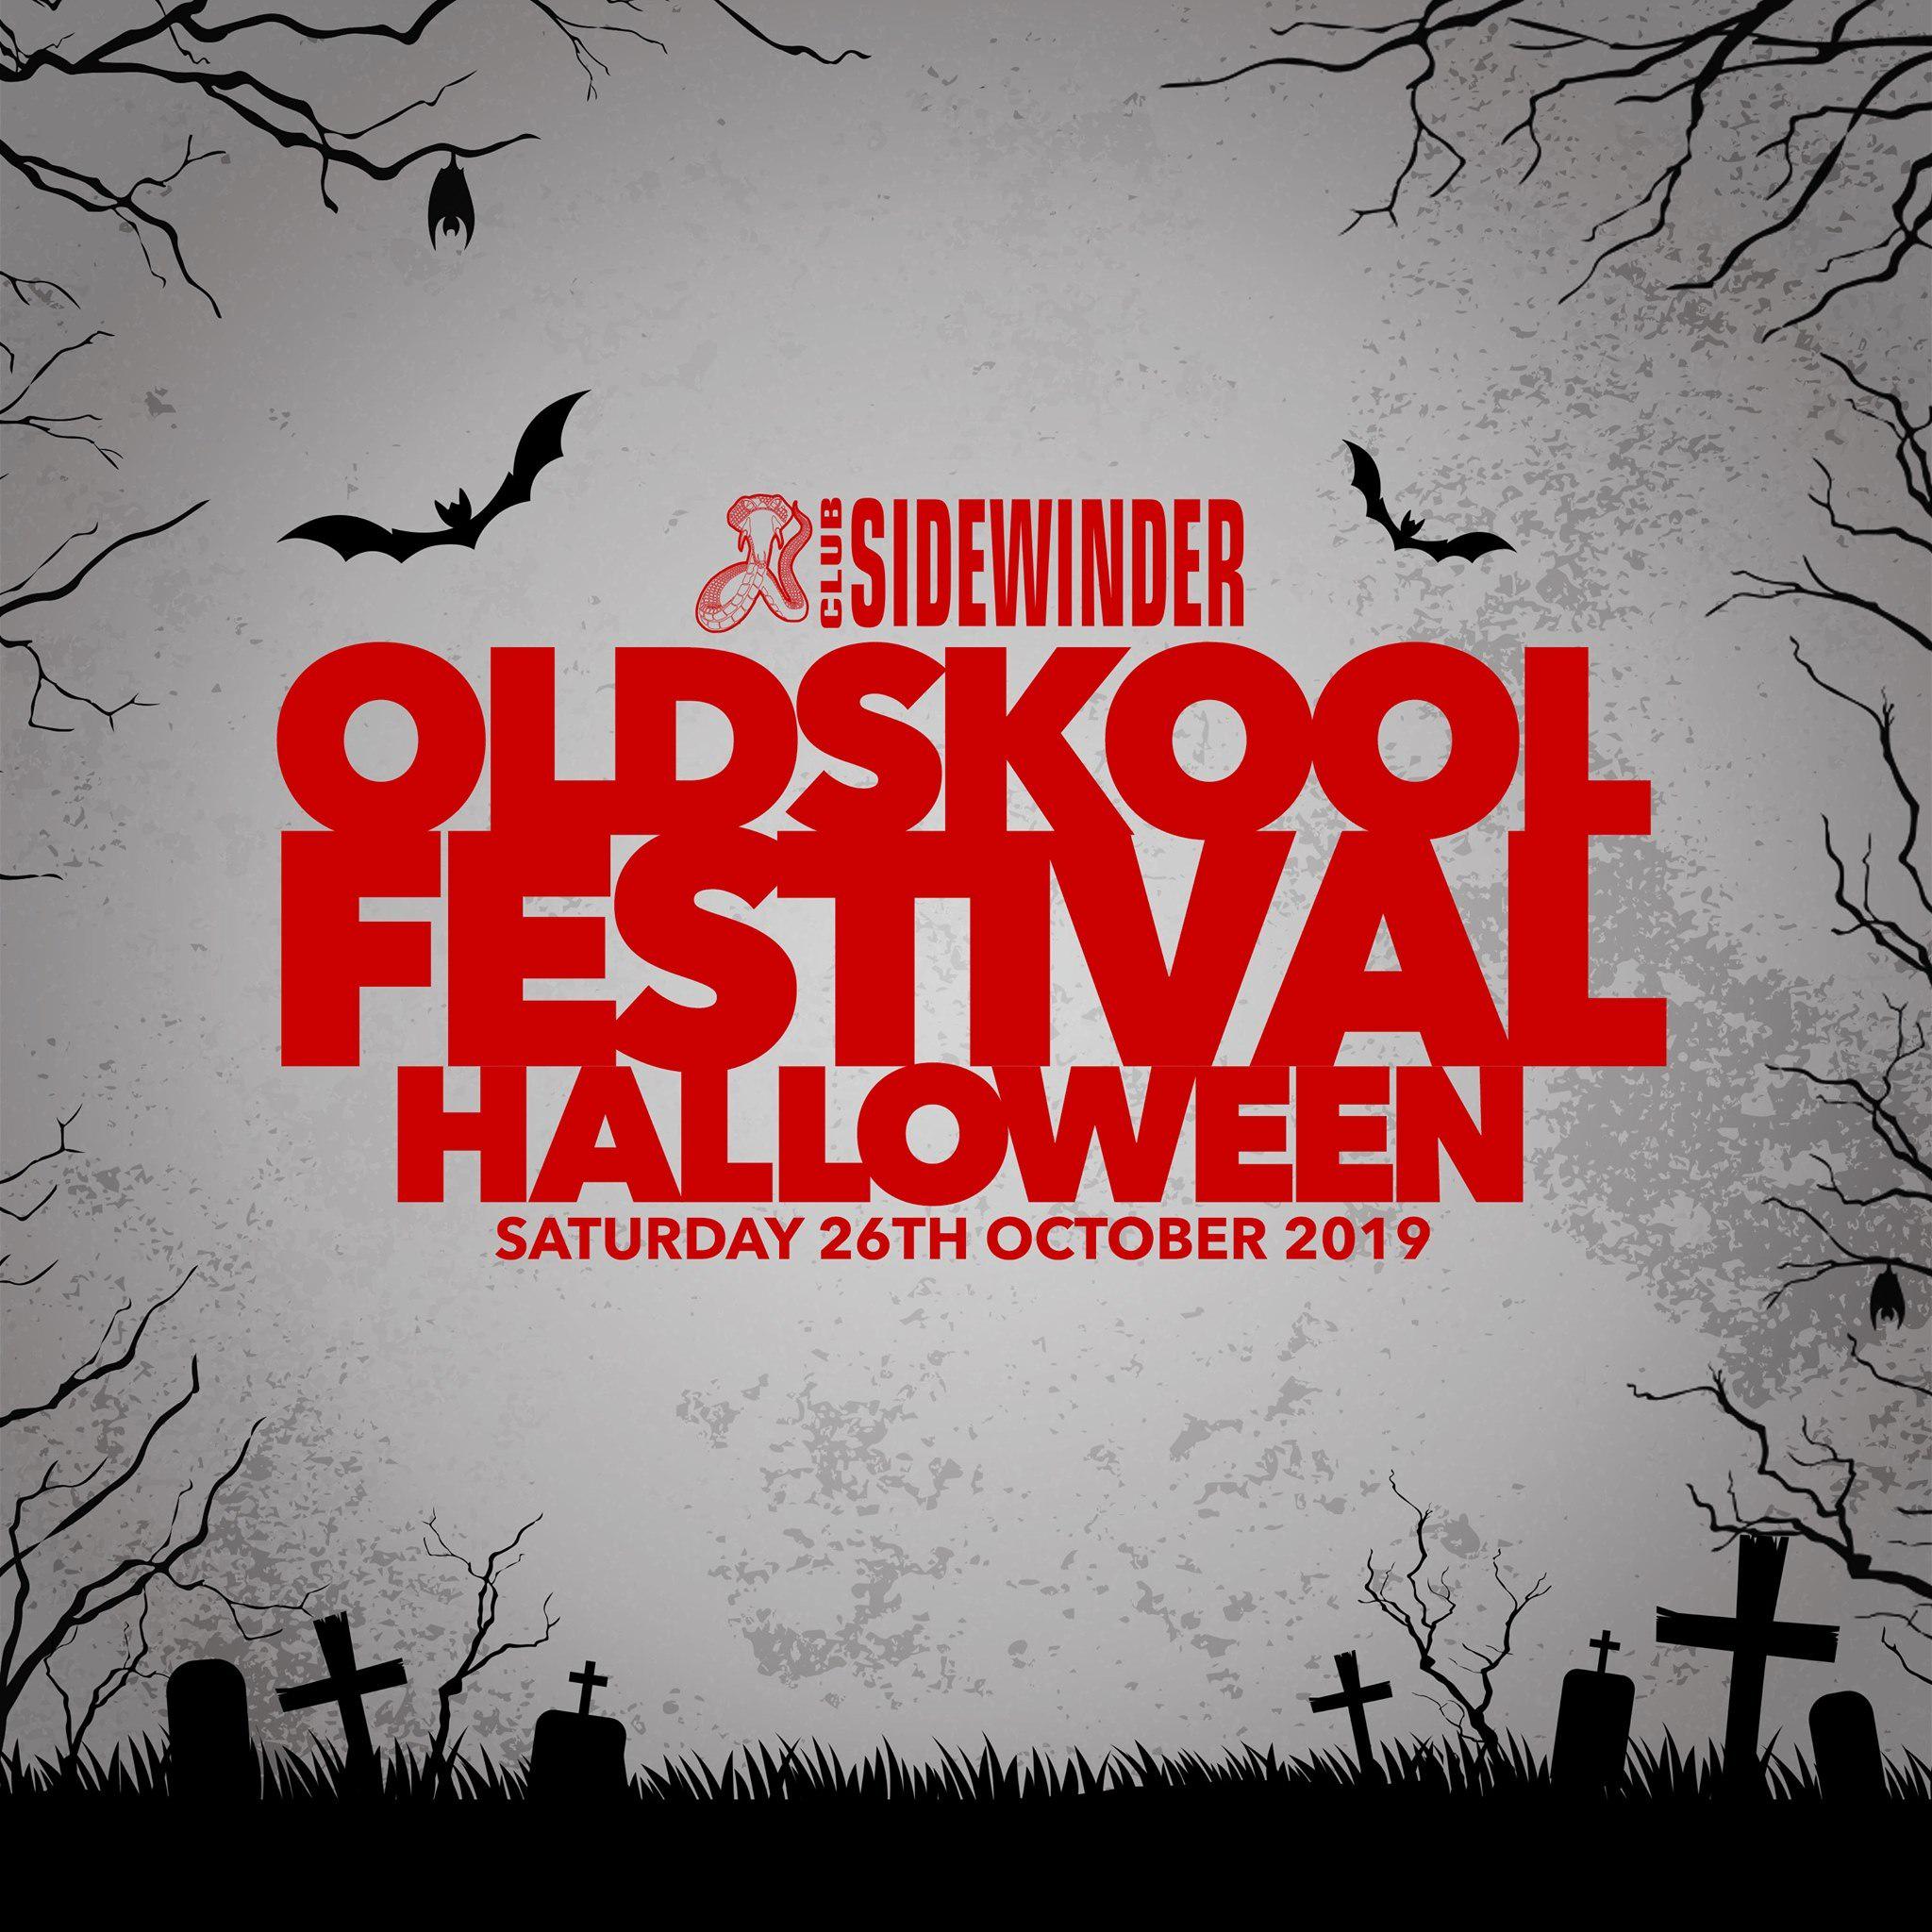 Sidewinder Oldskool Festival Halloween